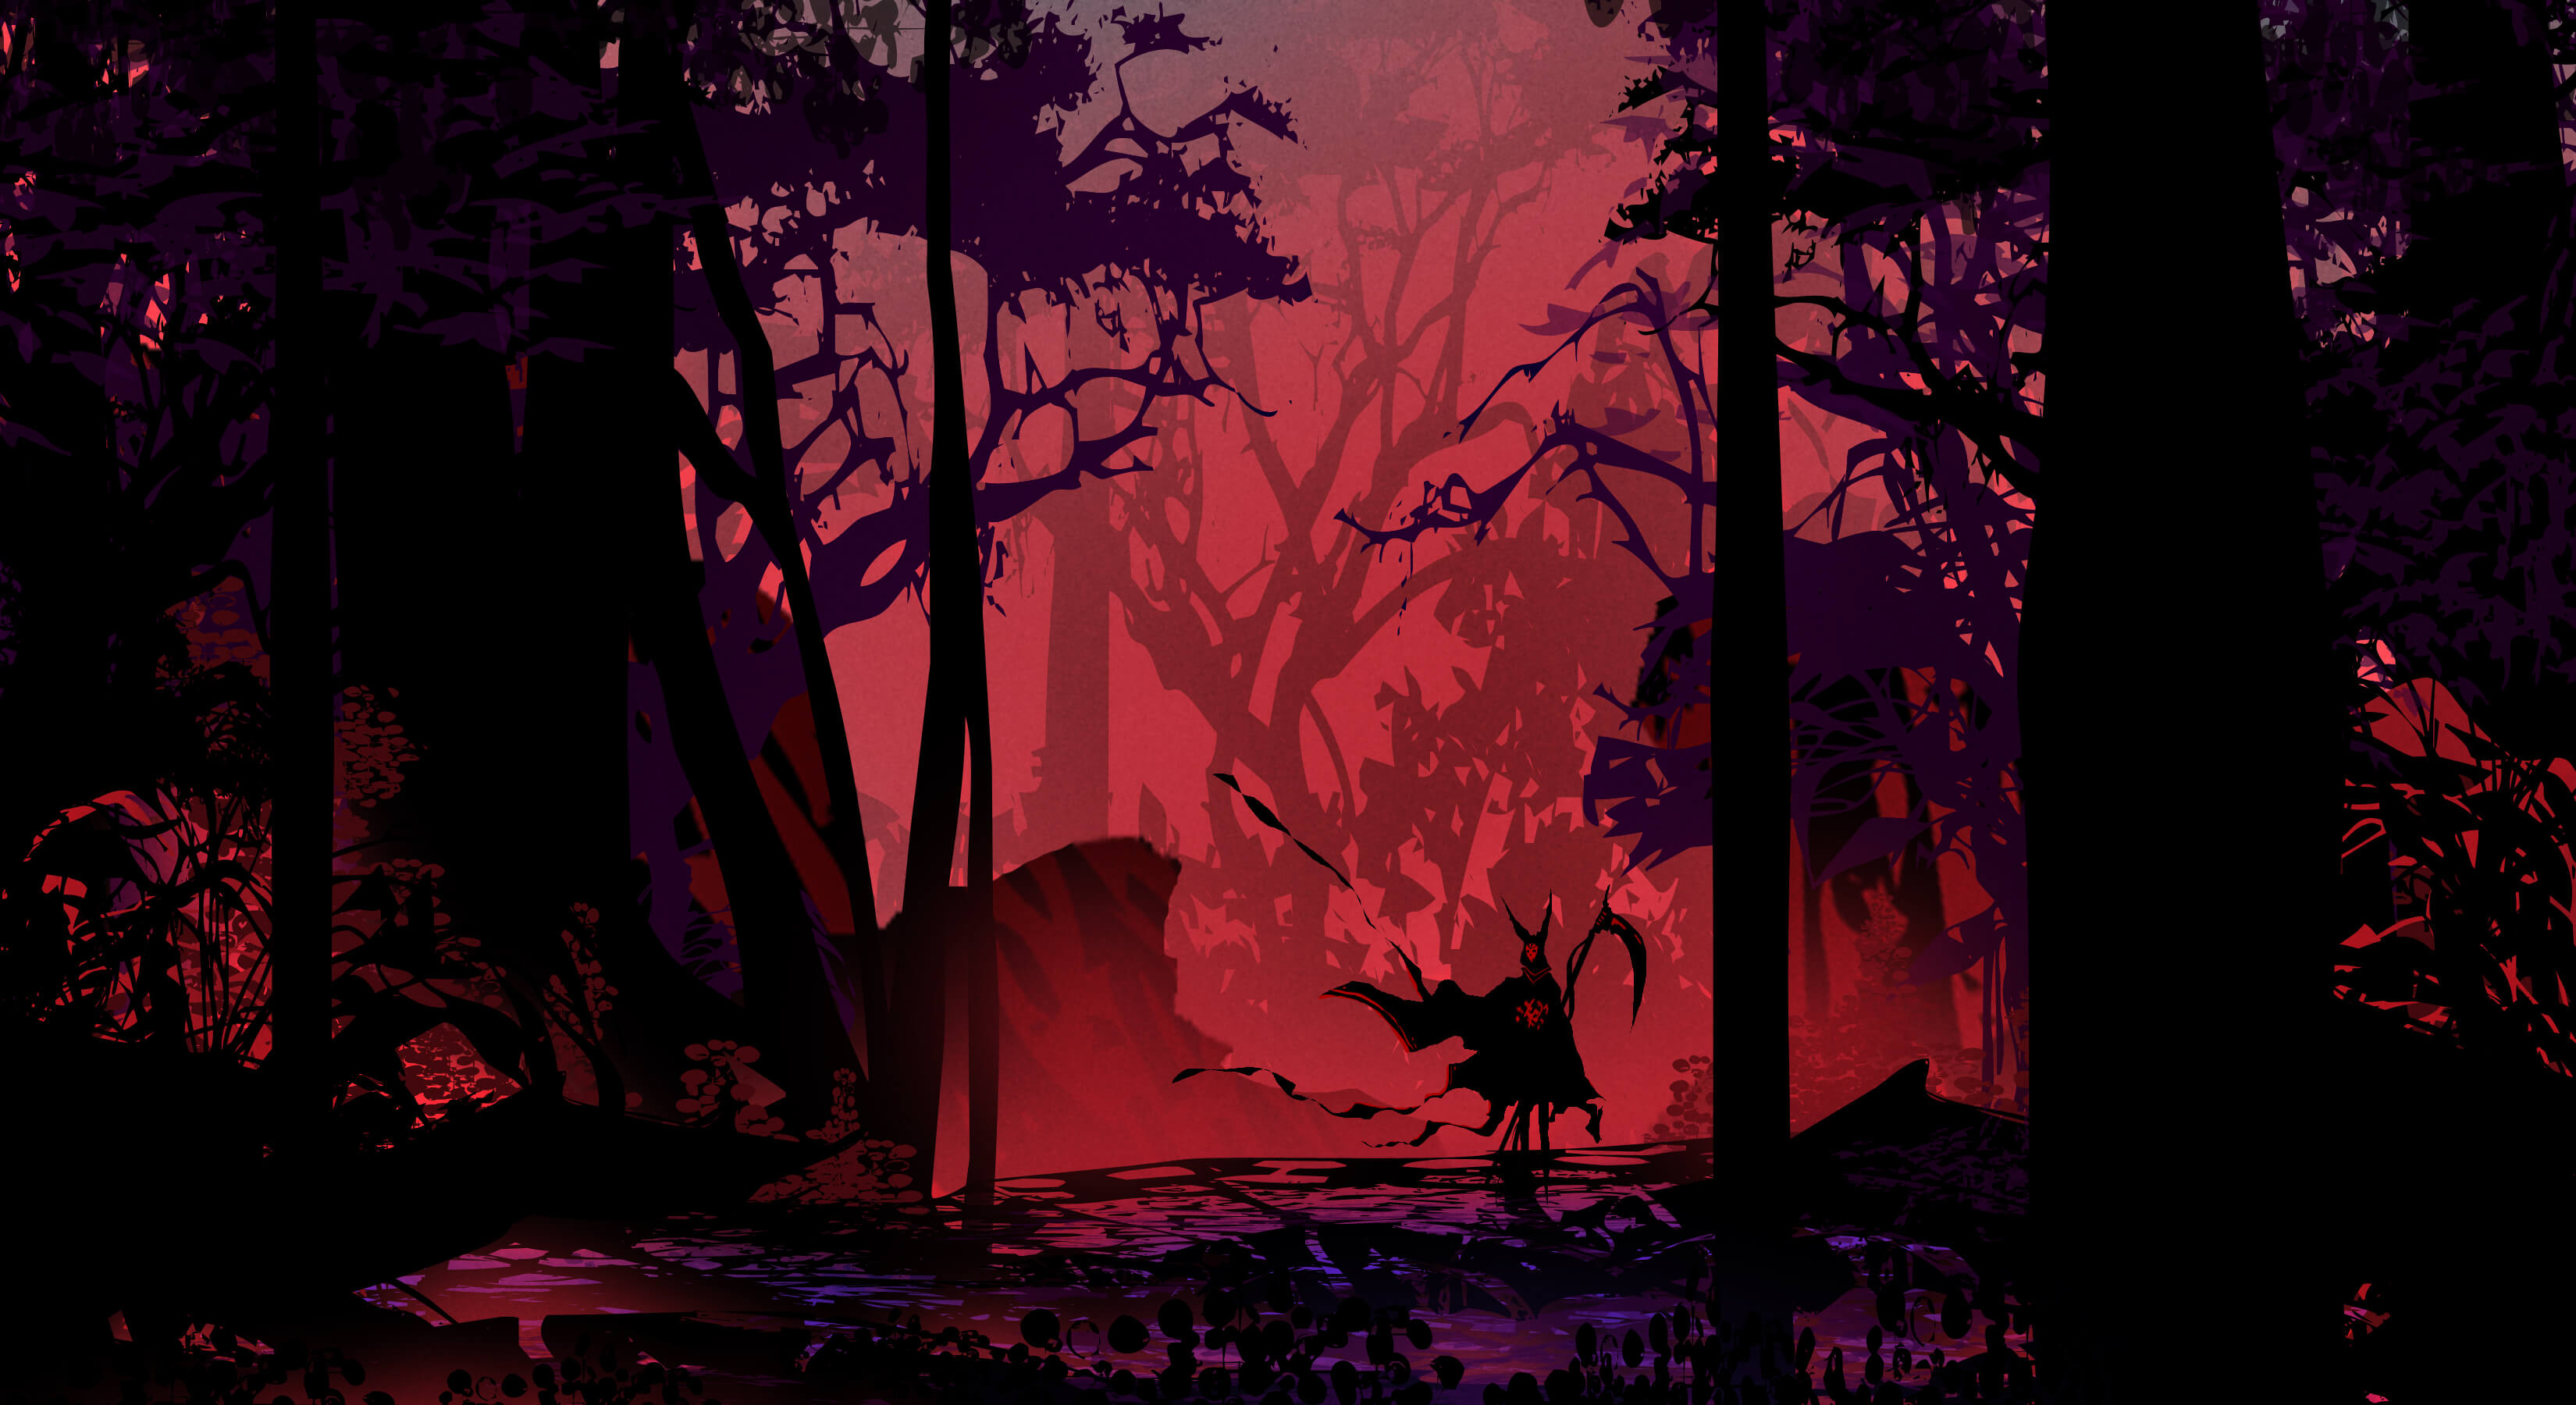 Digital art of a dark and creepy forest